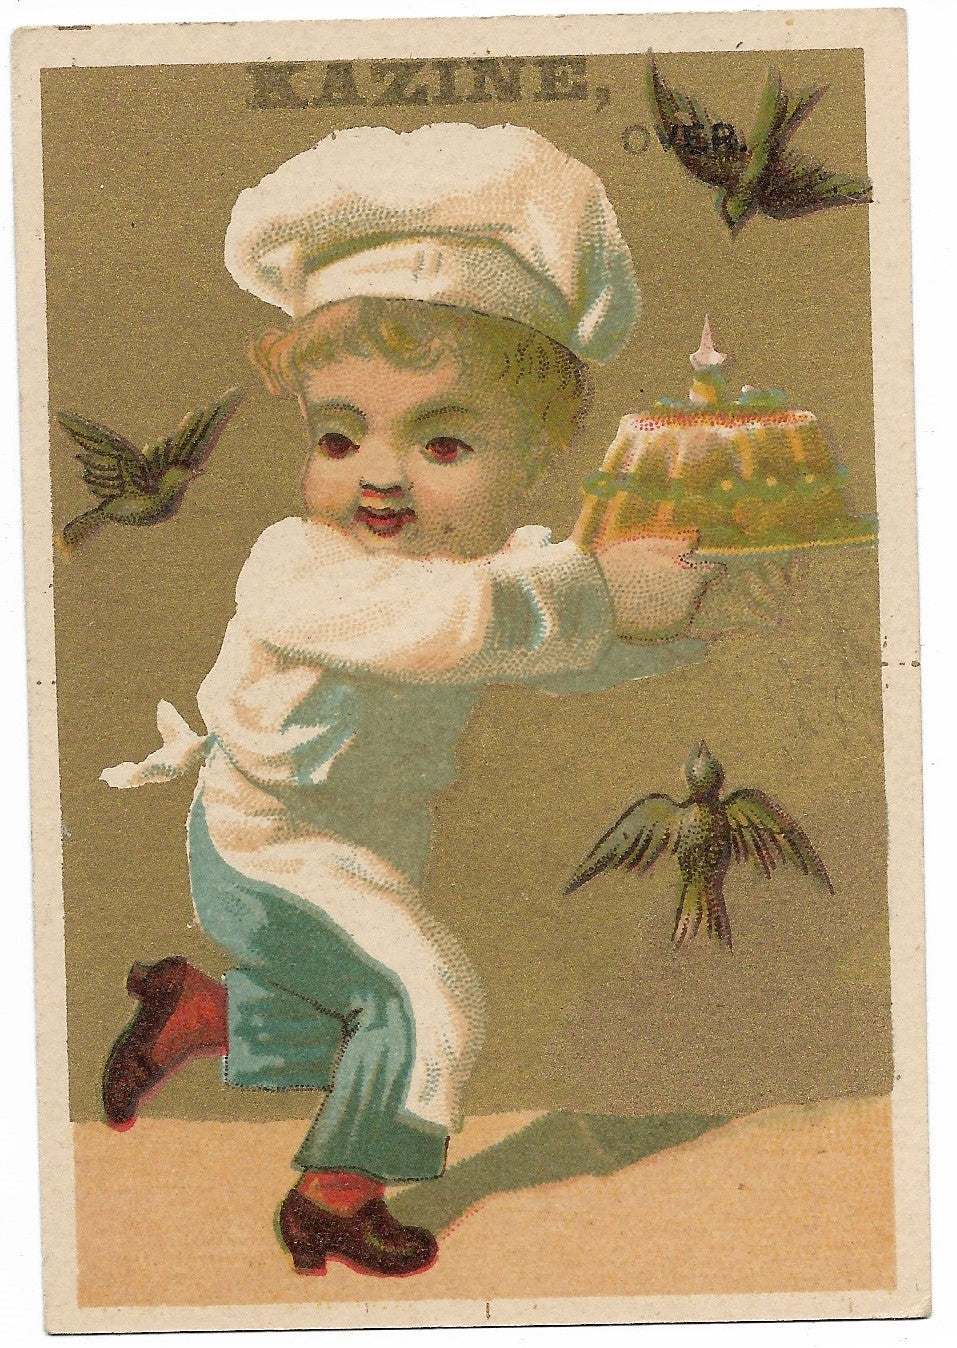 Kazine Washing Powder (Baby Chef) Antique Trade Card - 3" x 4.5"